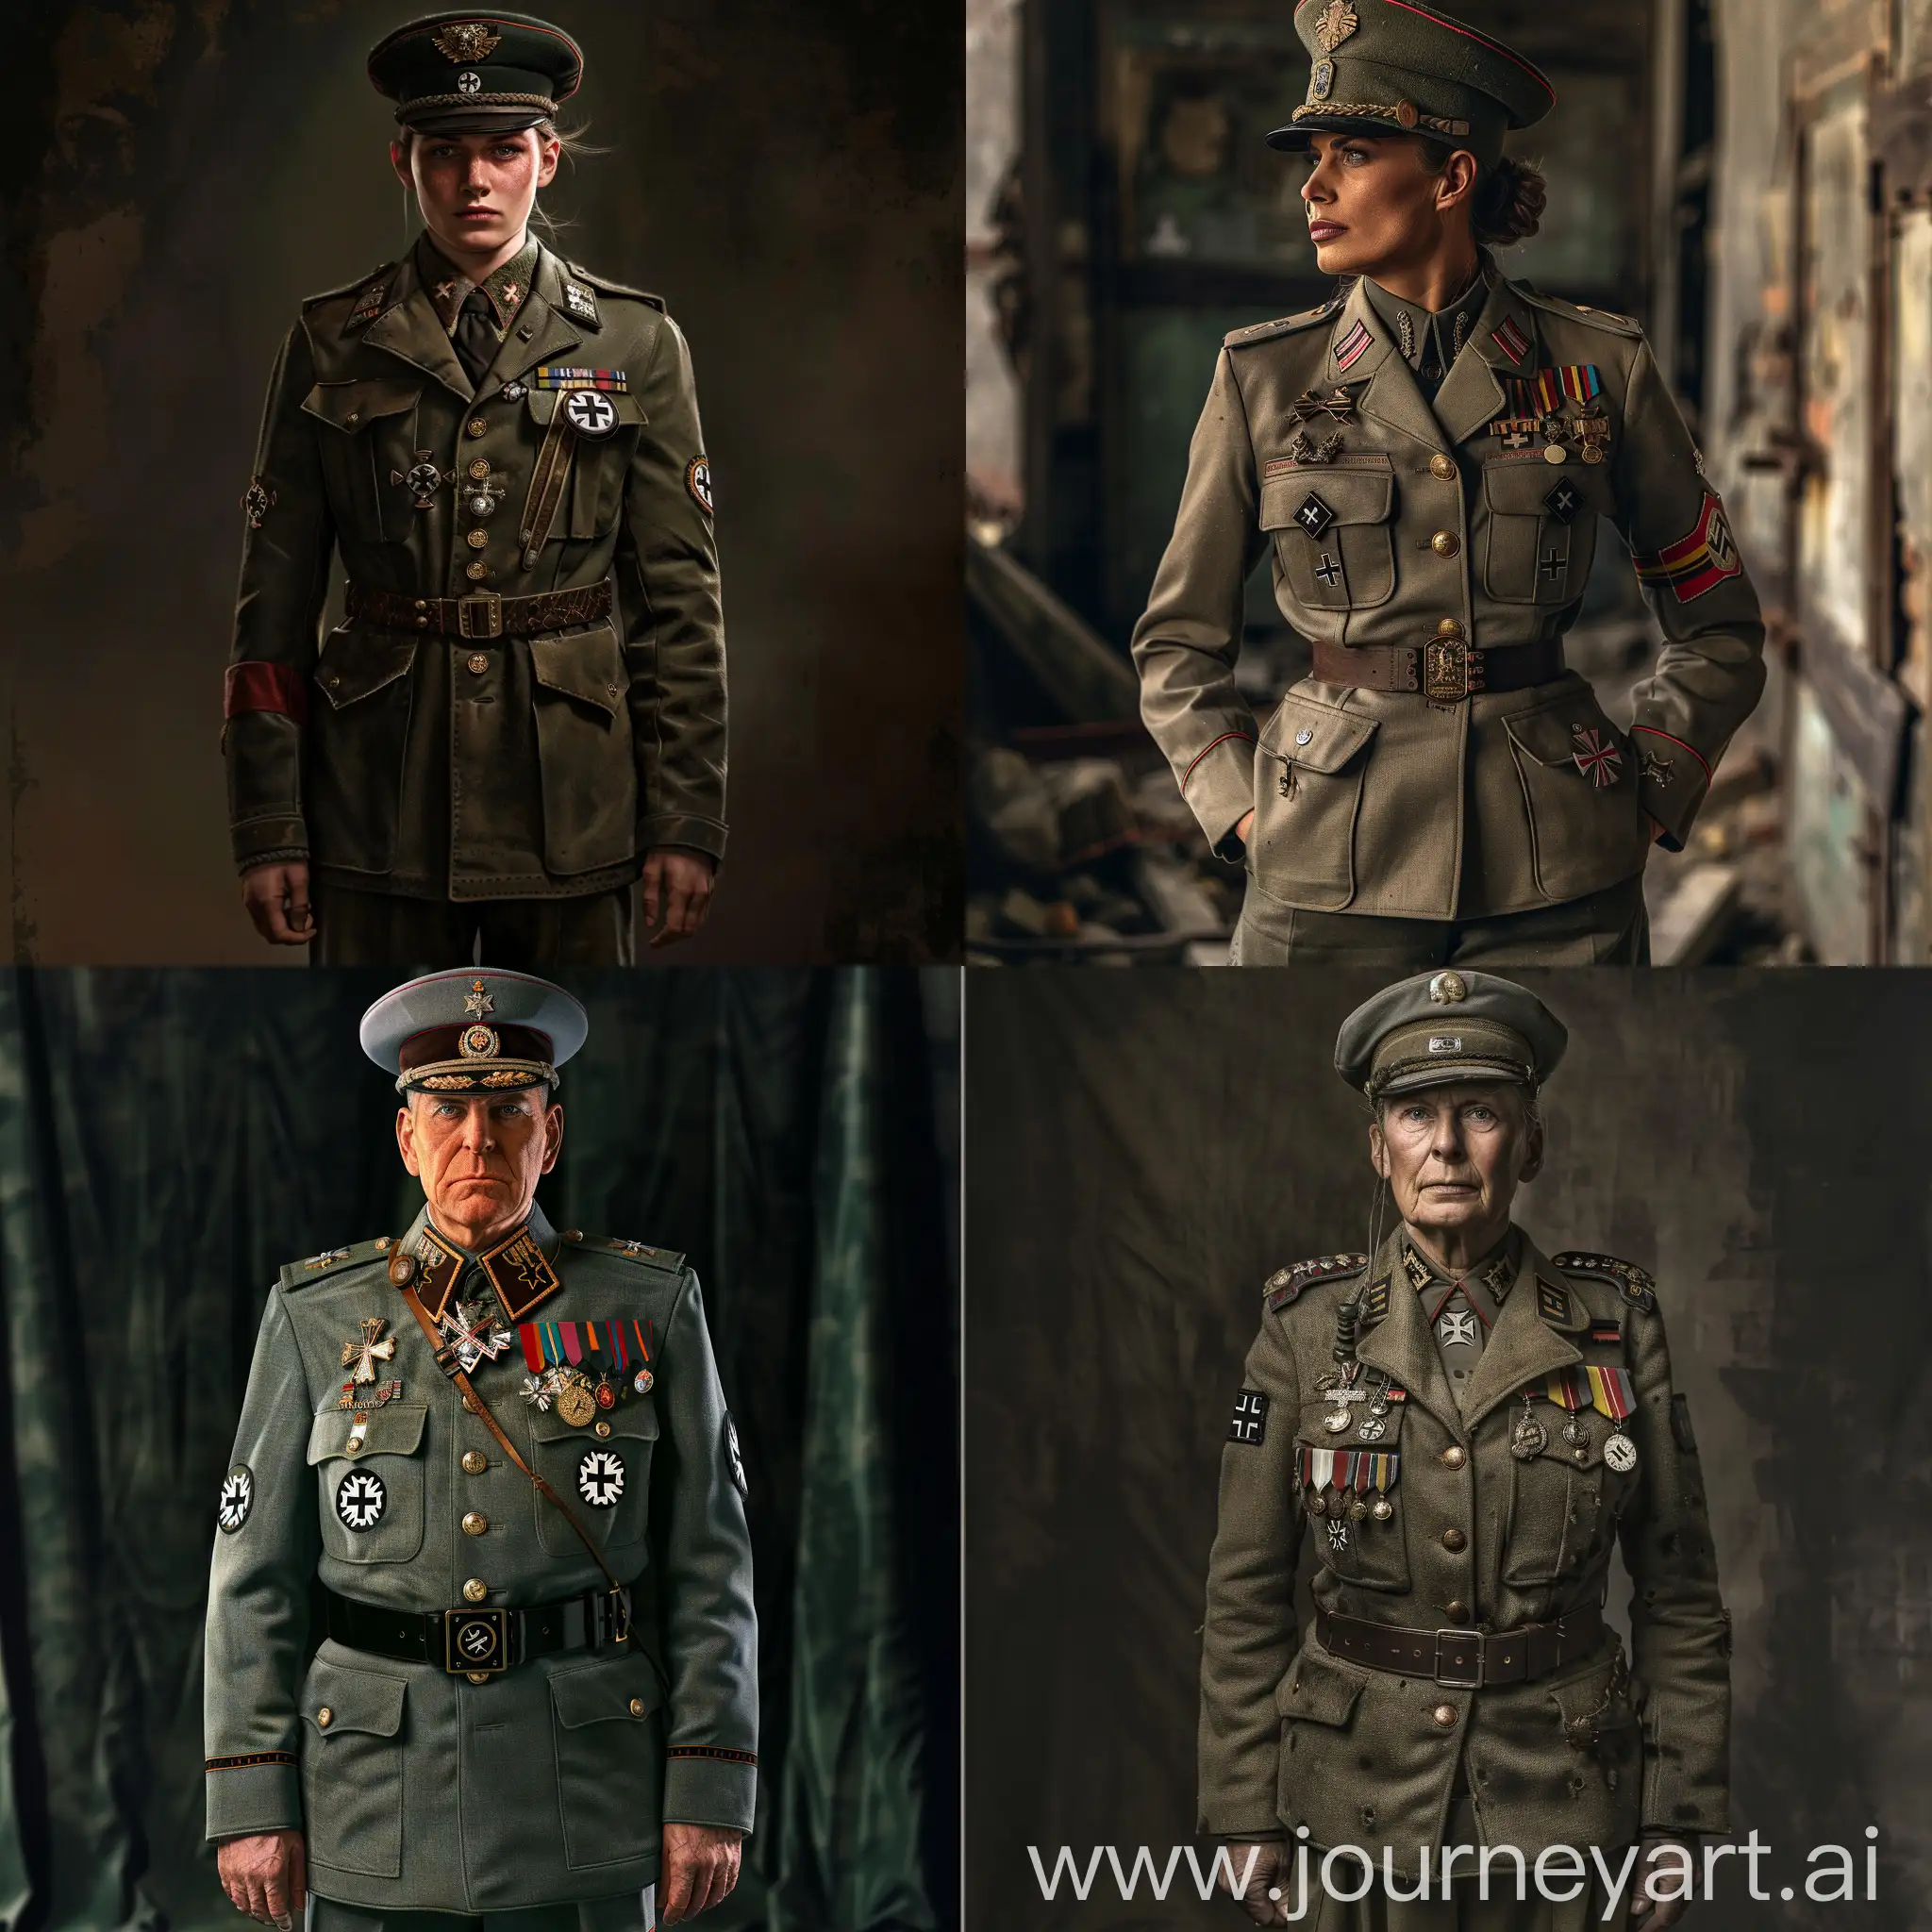 German-World-War-II-Military-Uniform-with-Detailed-Elements